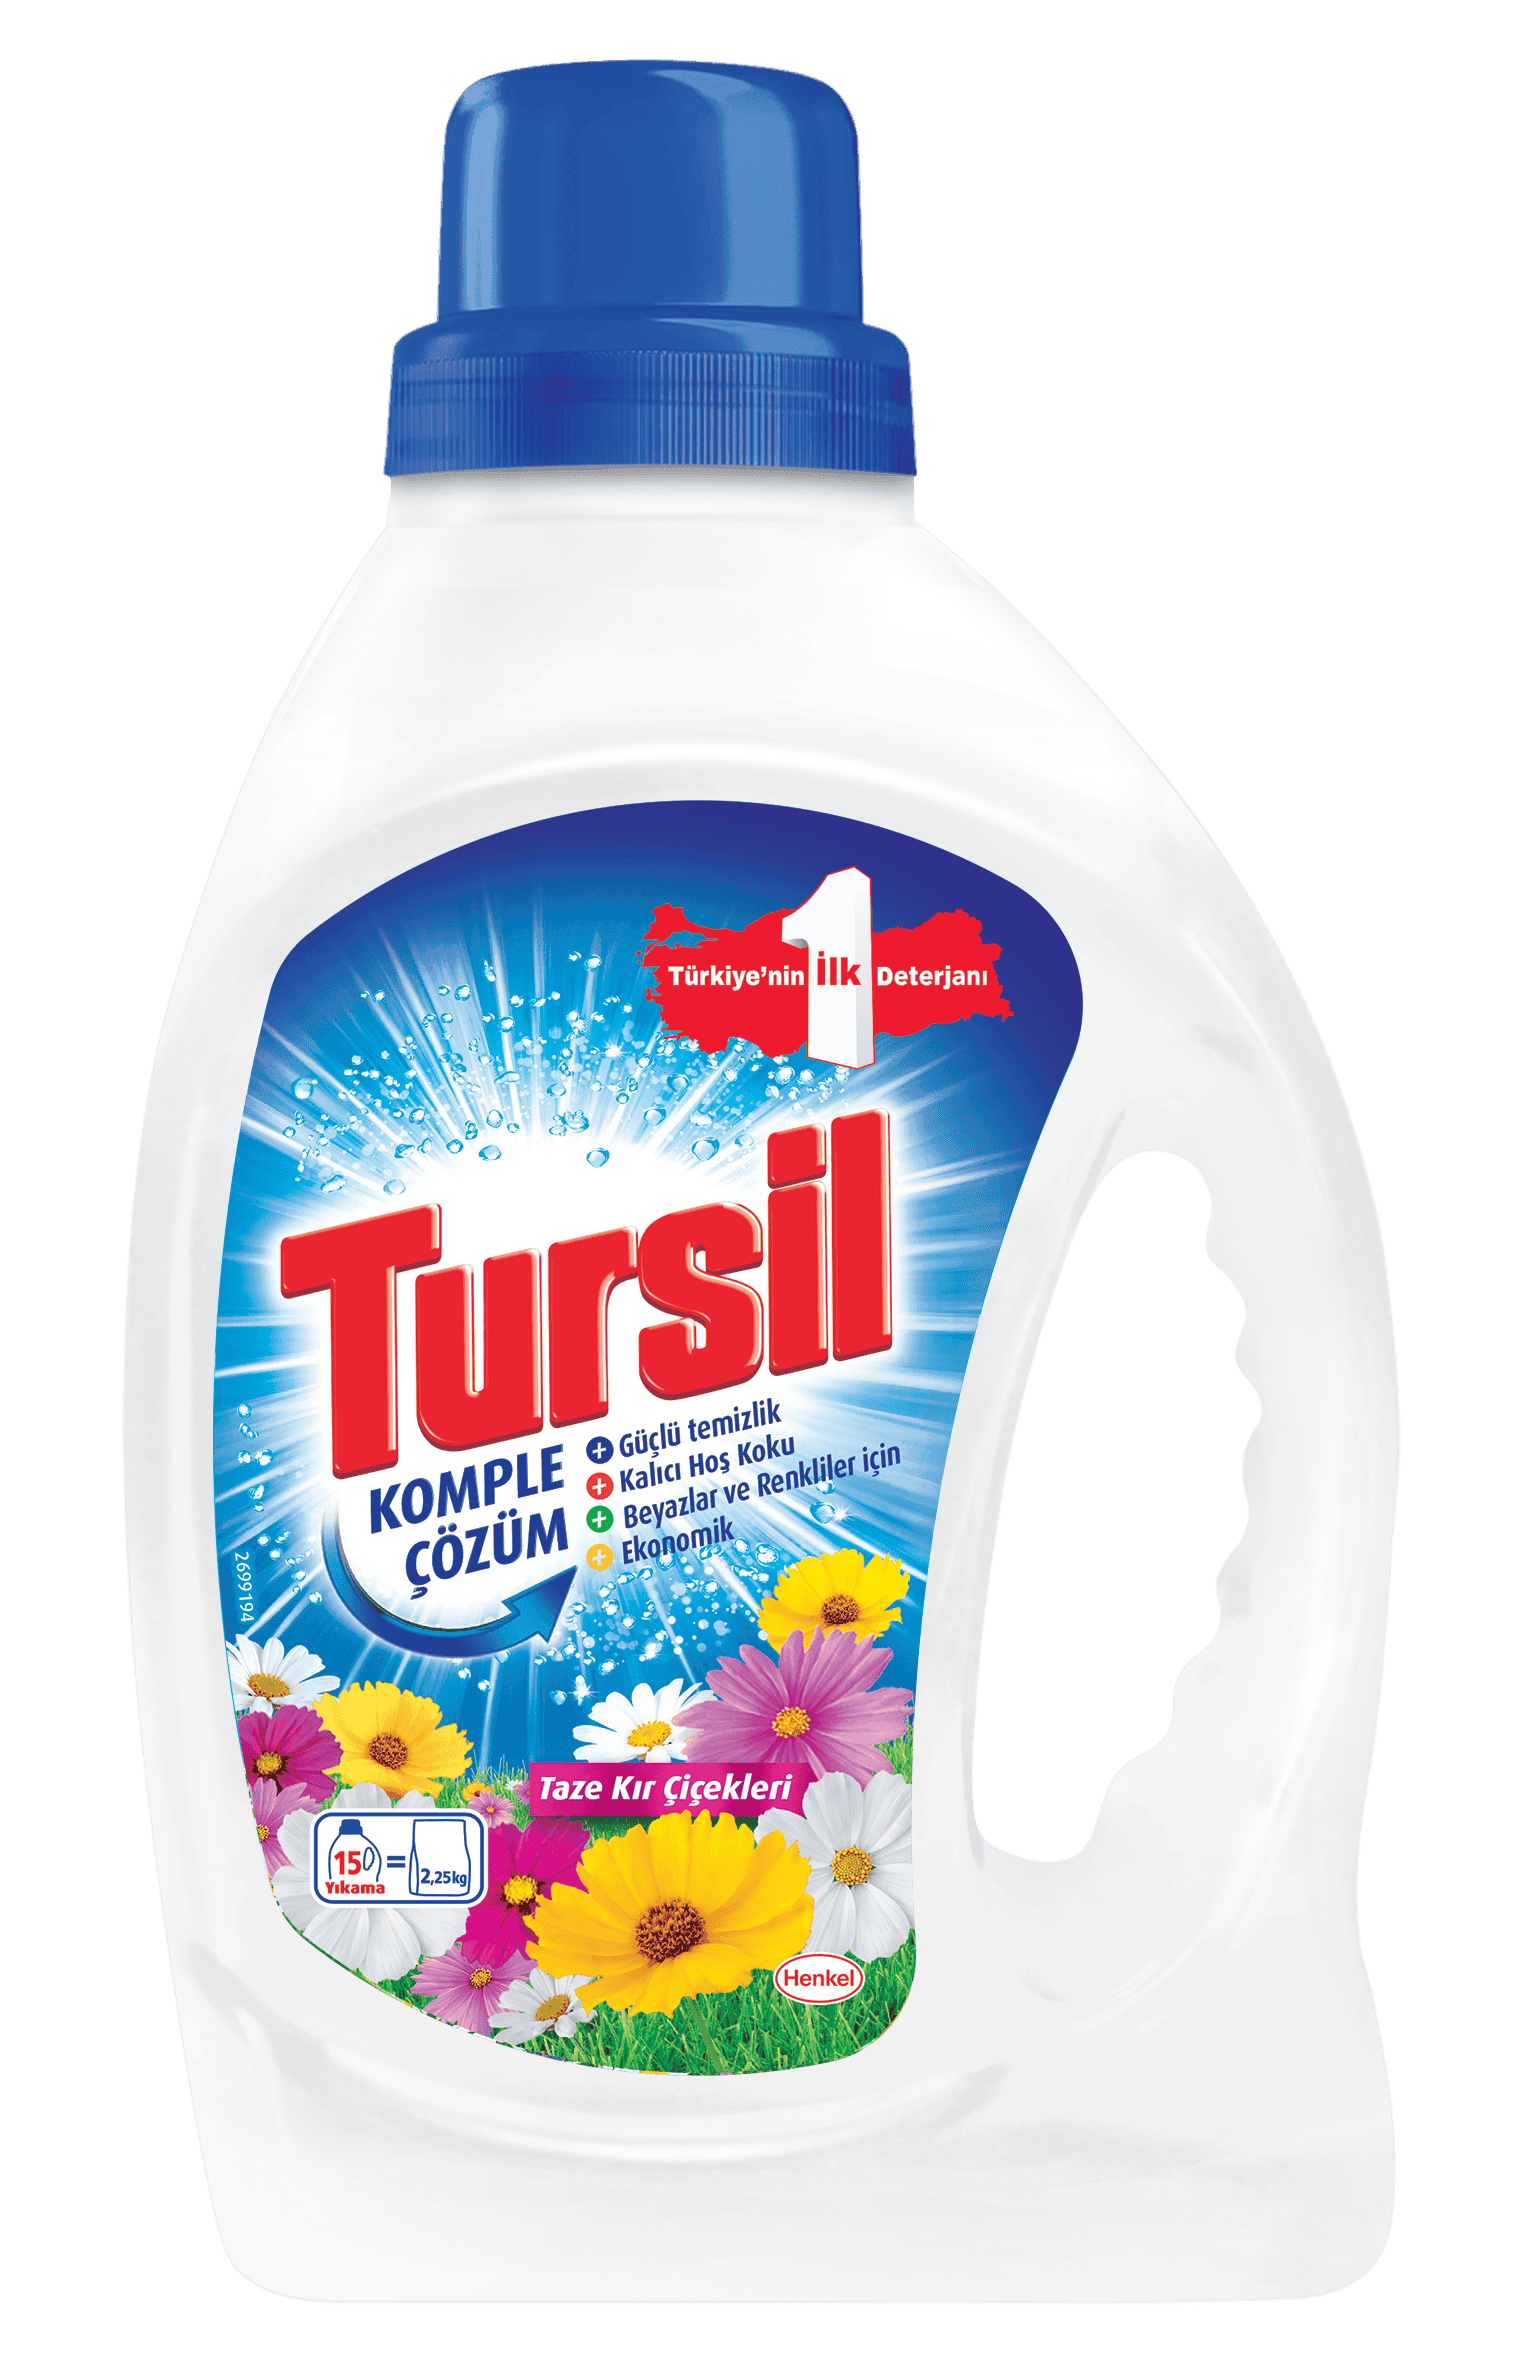 Tursil Gel Fresh Wild Flowers 15 Wl 1050 ml 